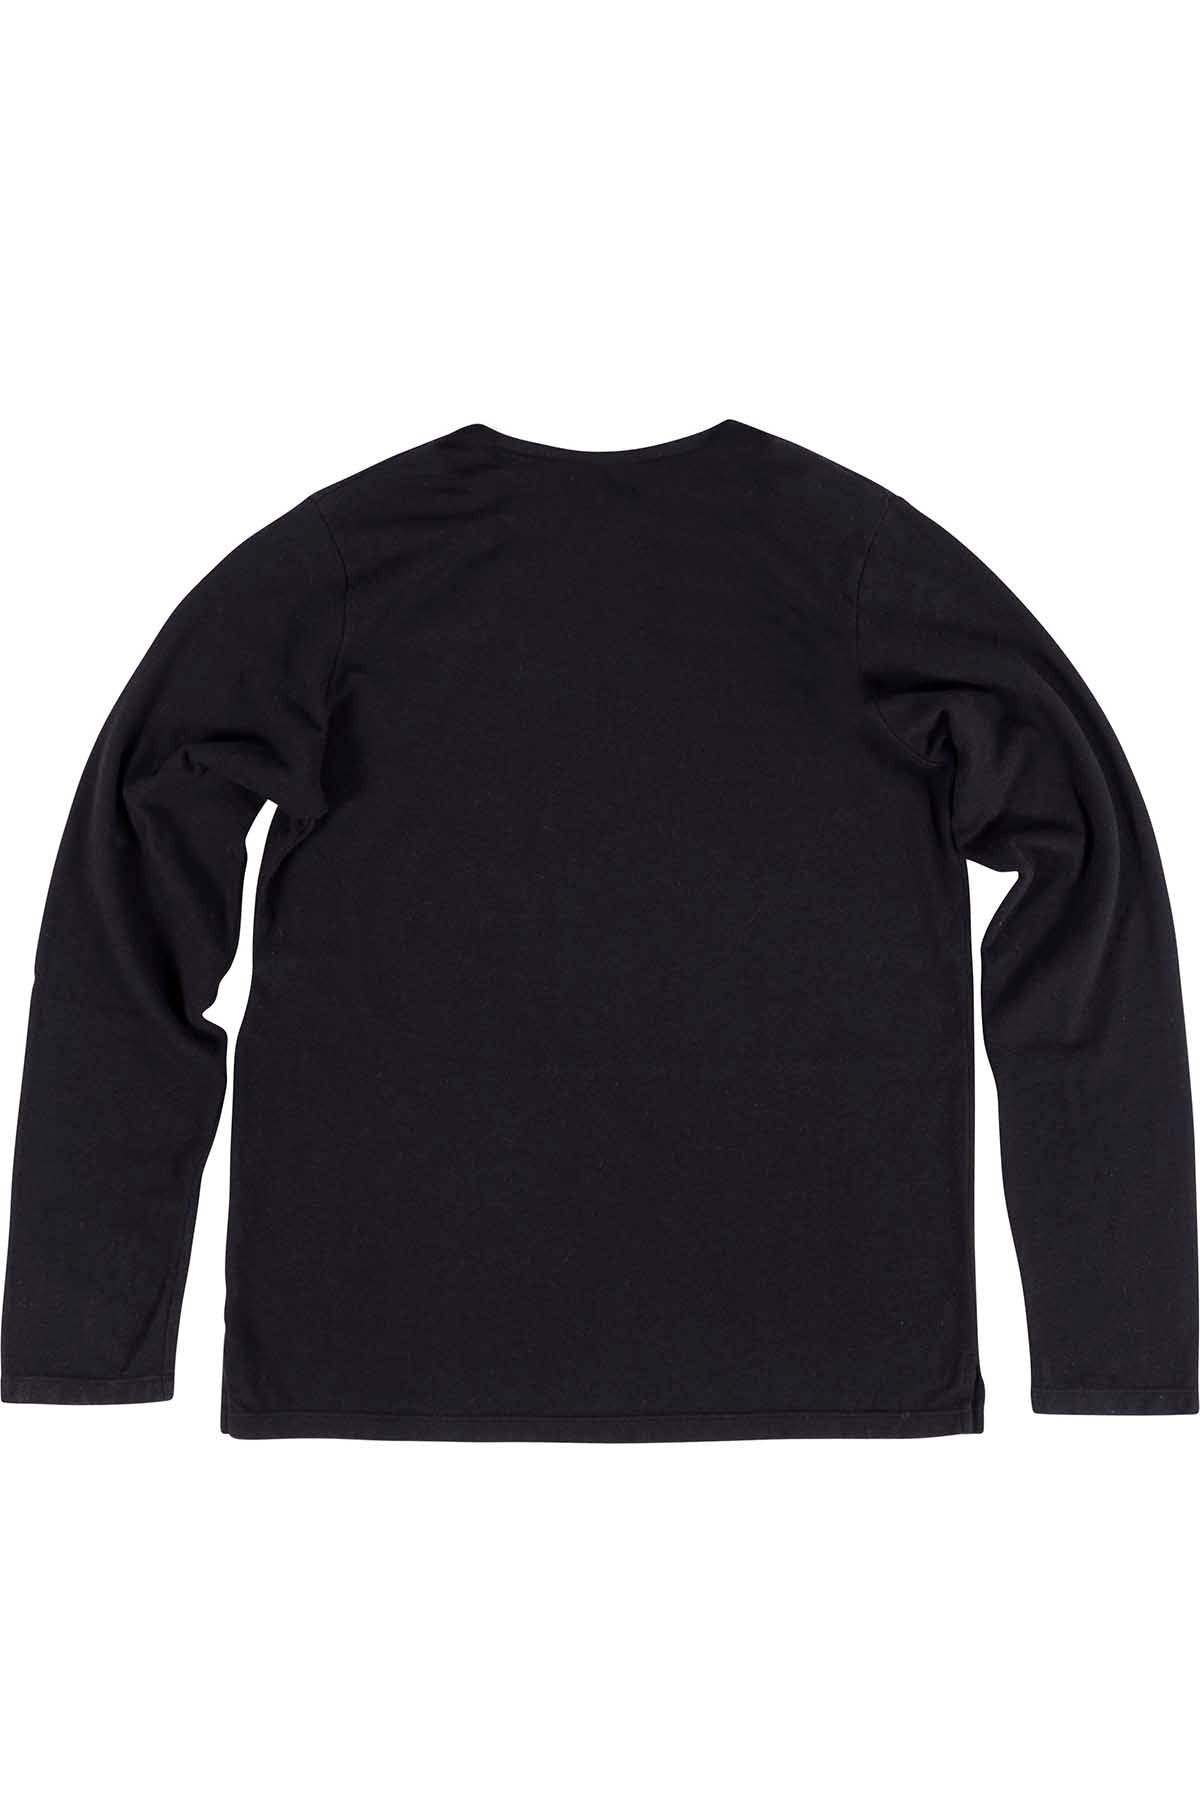 Rxmance Unisex Black Loose-Knit Long-Sleeve Tee Shirt